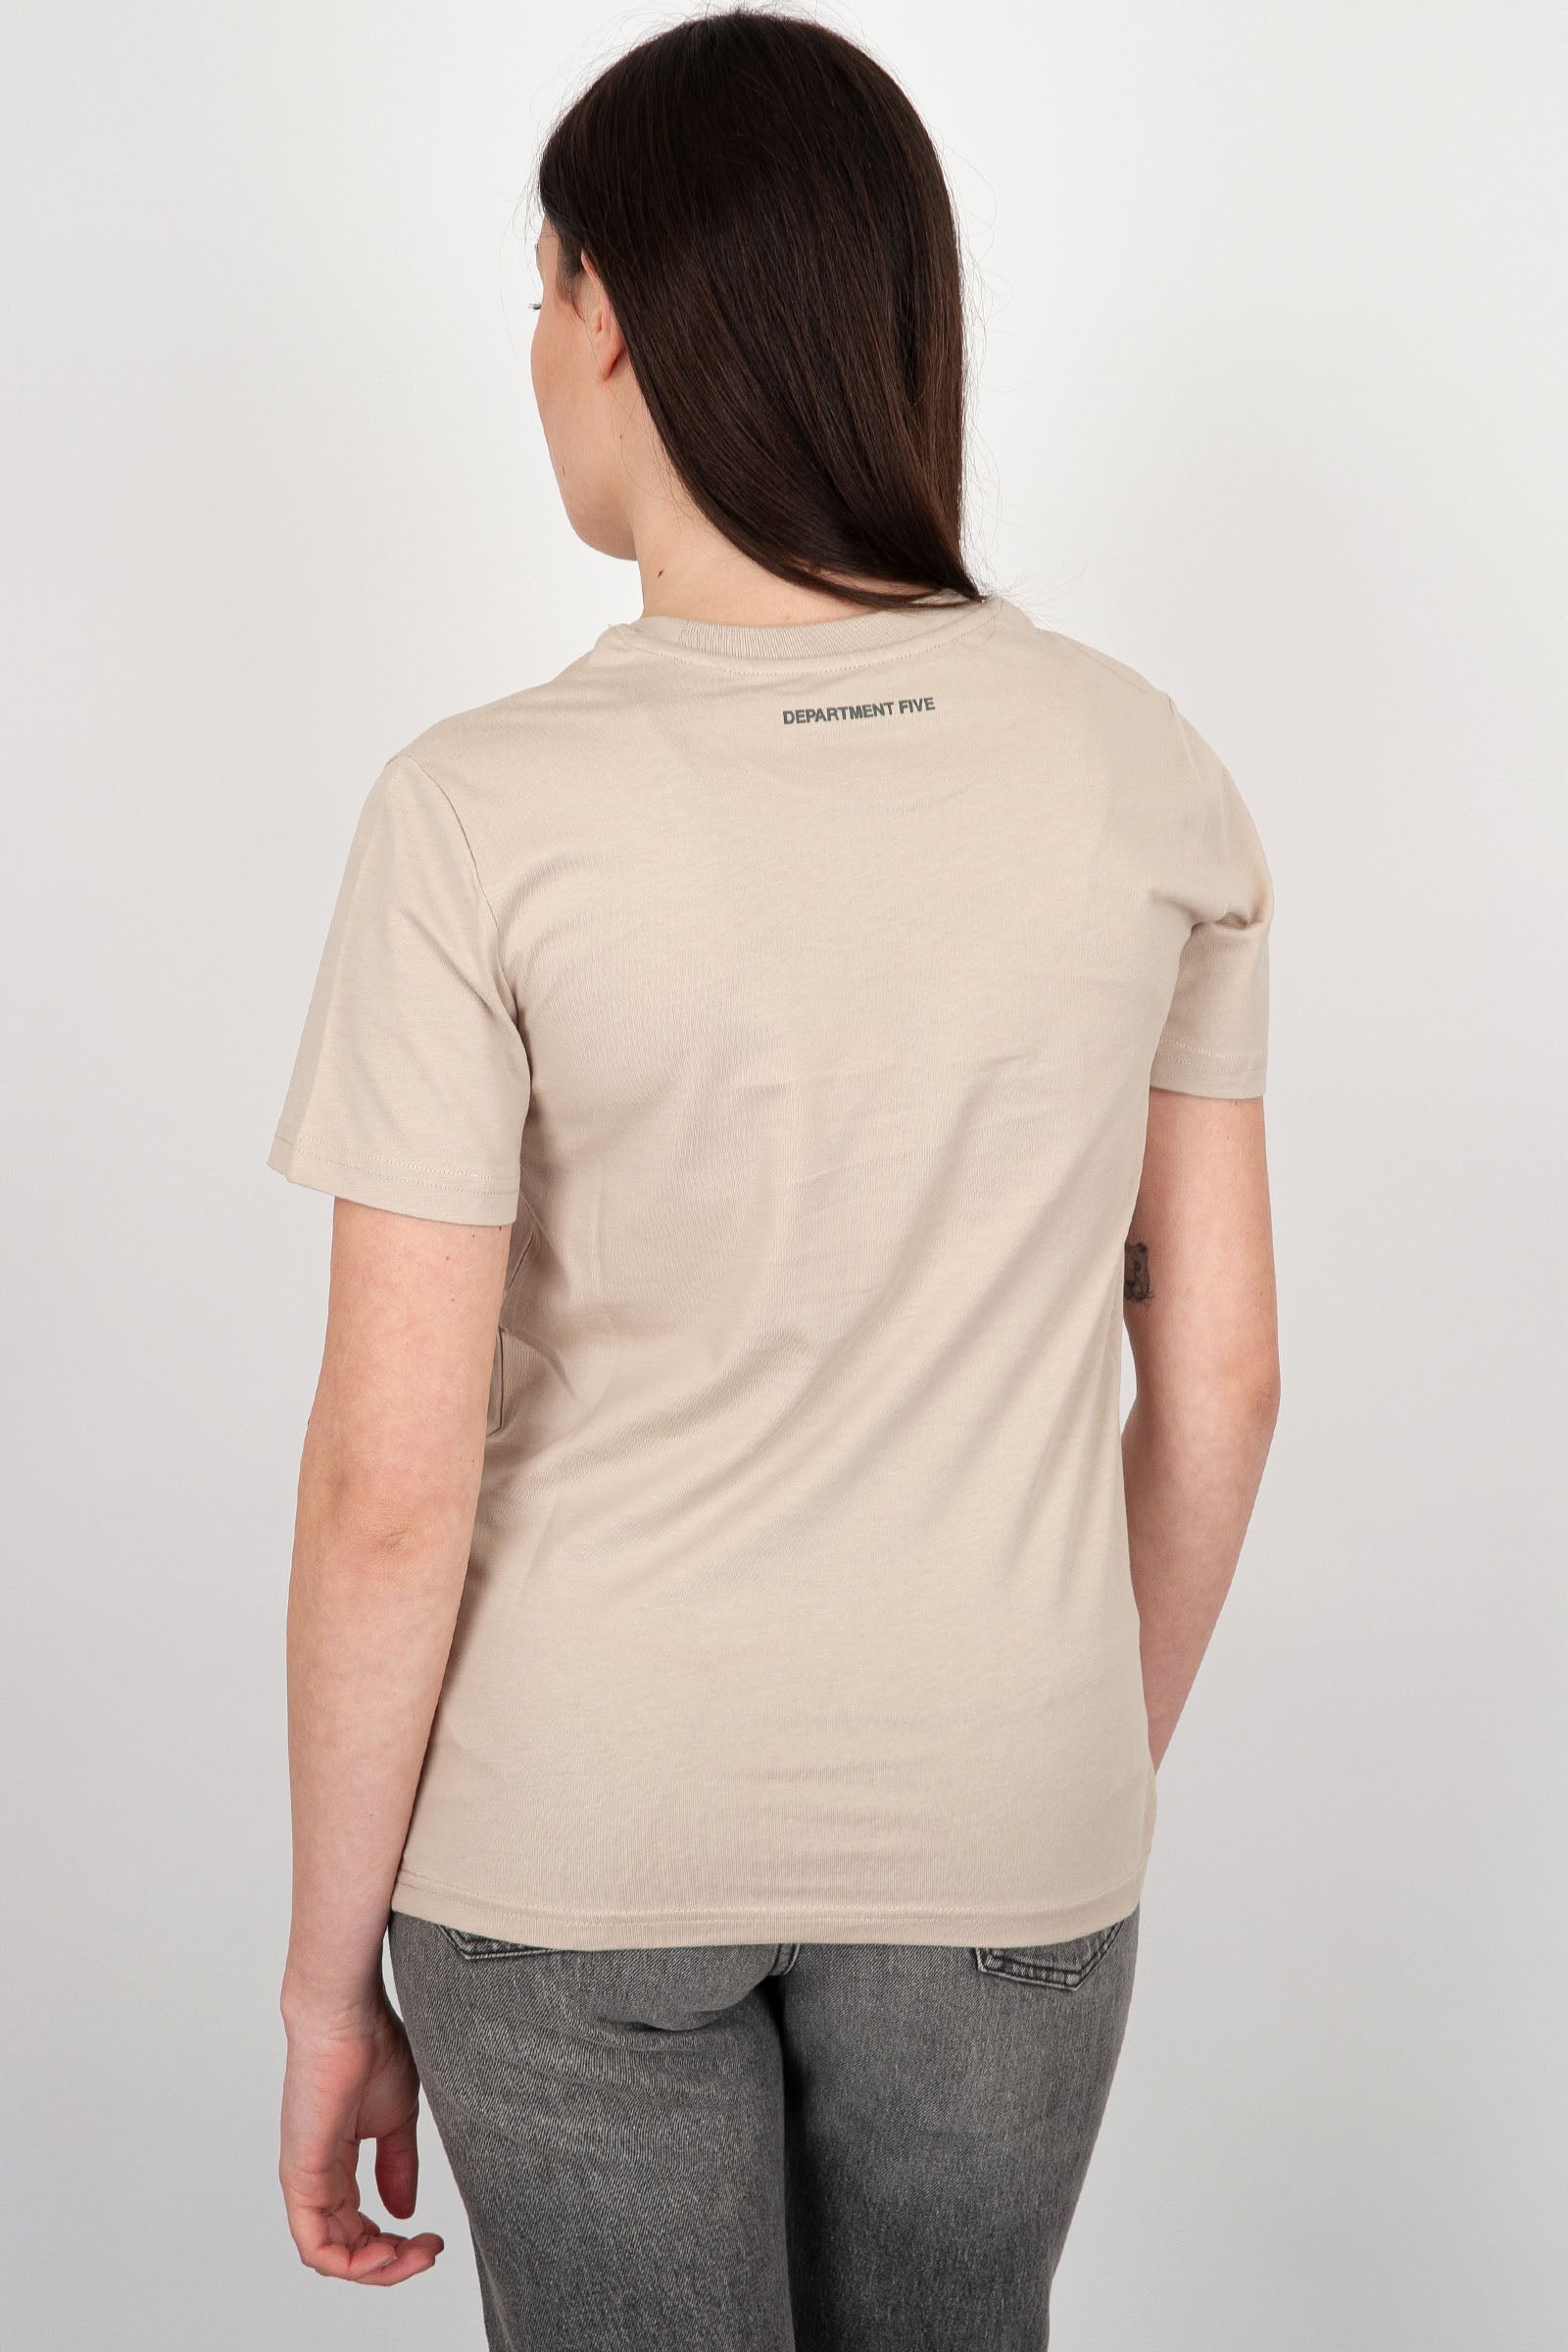 Department Five T-Shirt Girocollo Fleur Cotone Sabbia - 4